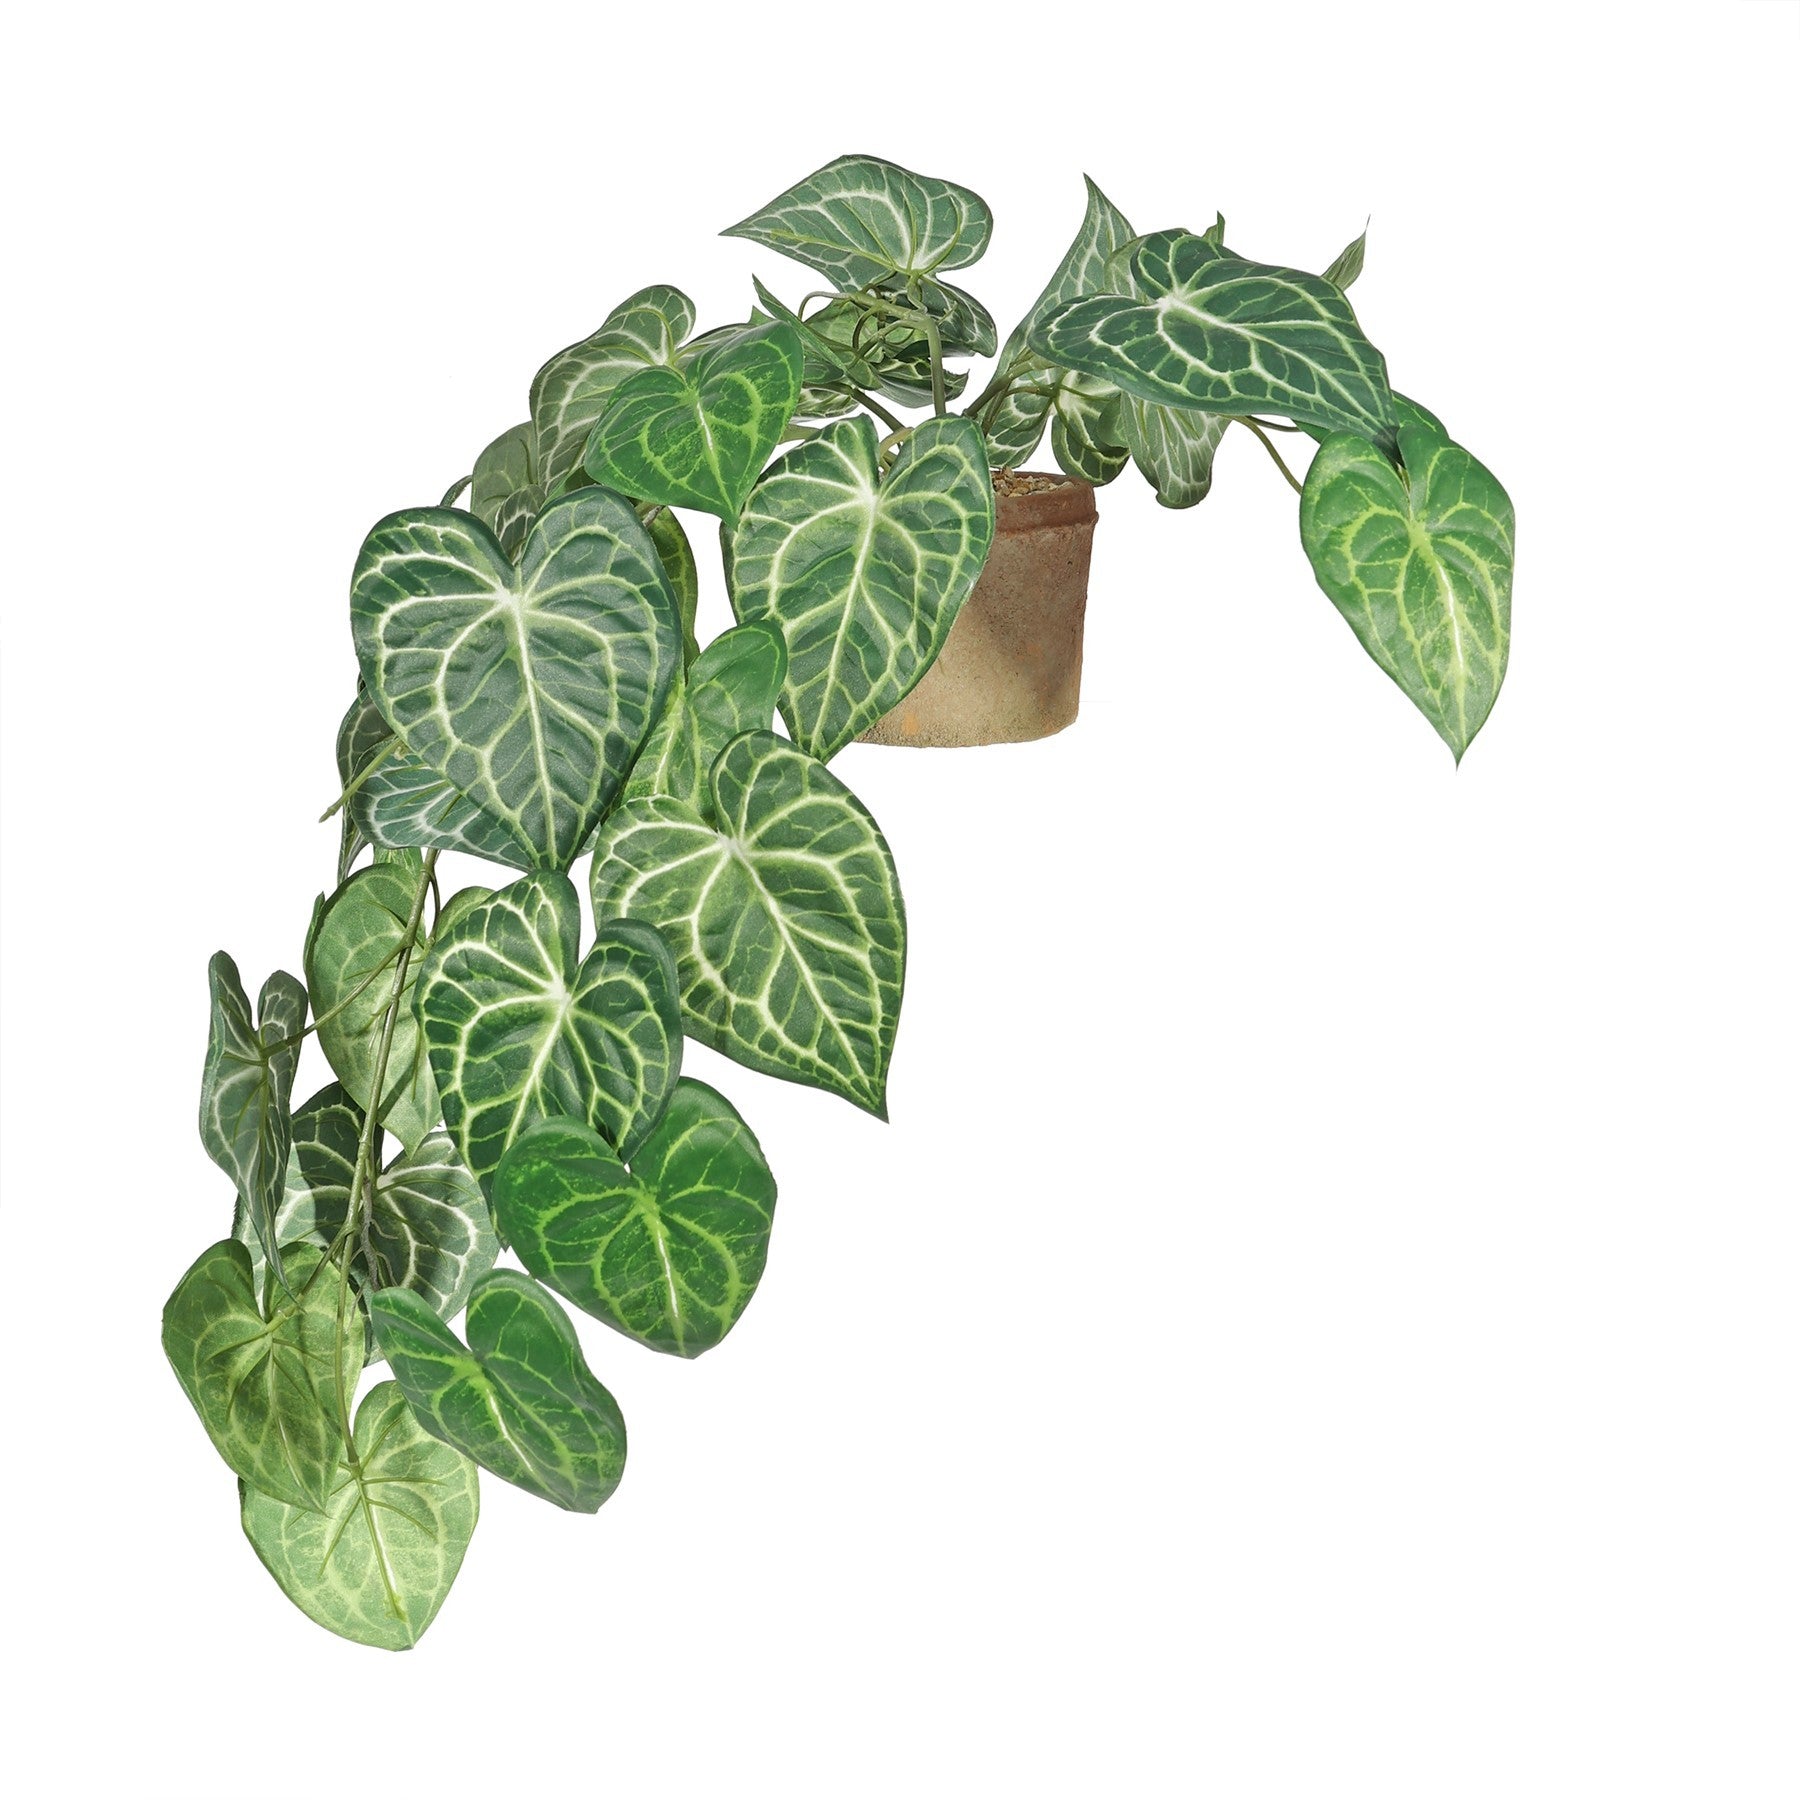 View Trailing Syngonium Houseplant in Terracotta Pot 80cm information